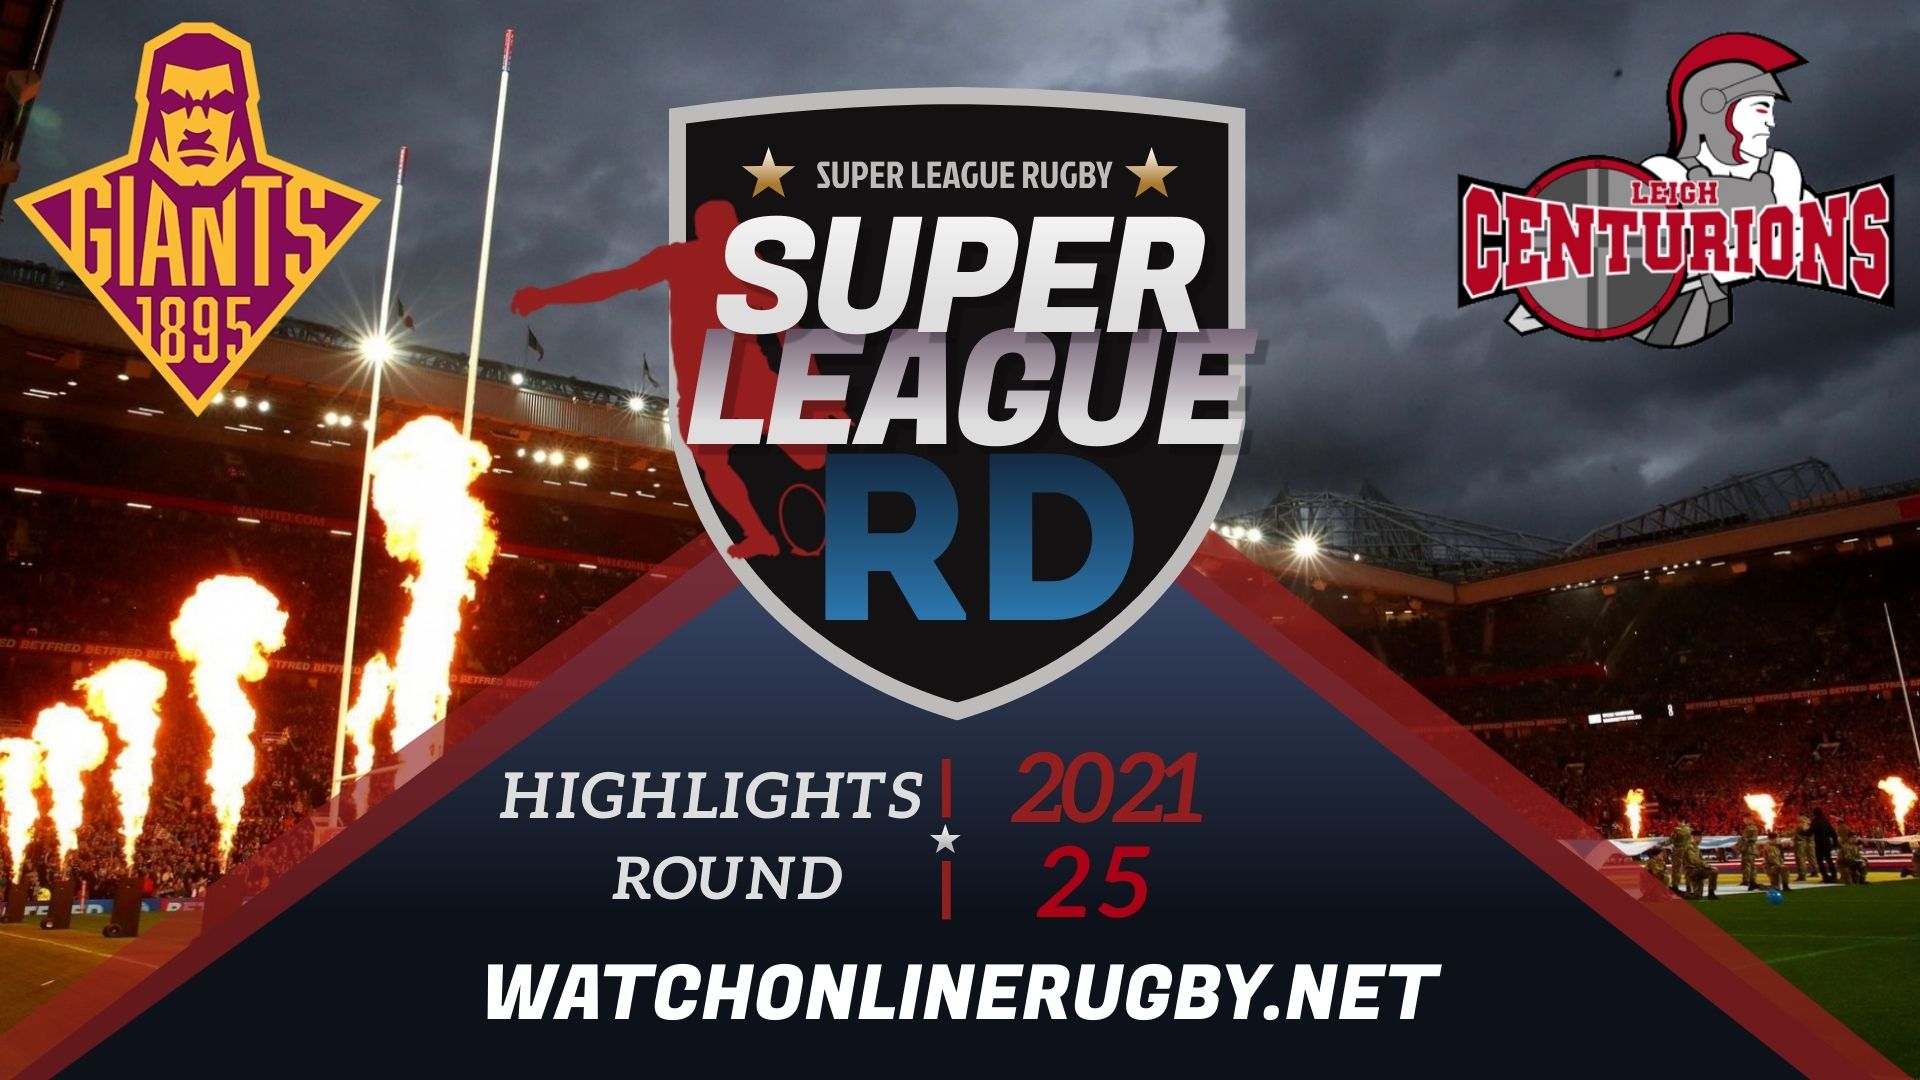 Huddersfield Giants Vs Leigh Centurions Super League Rugby 2021 RD 25